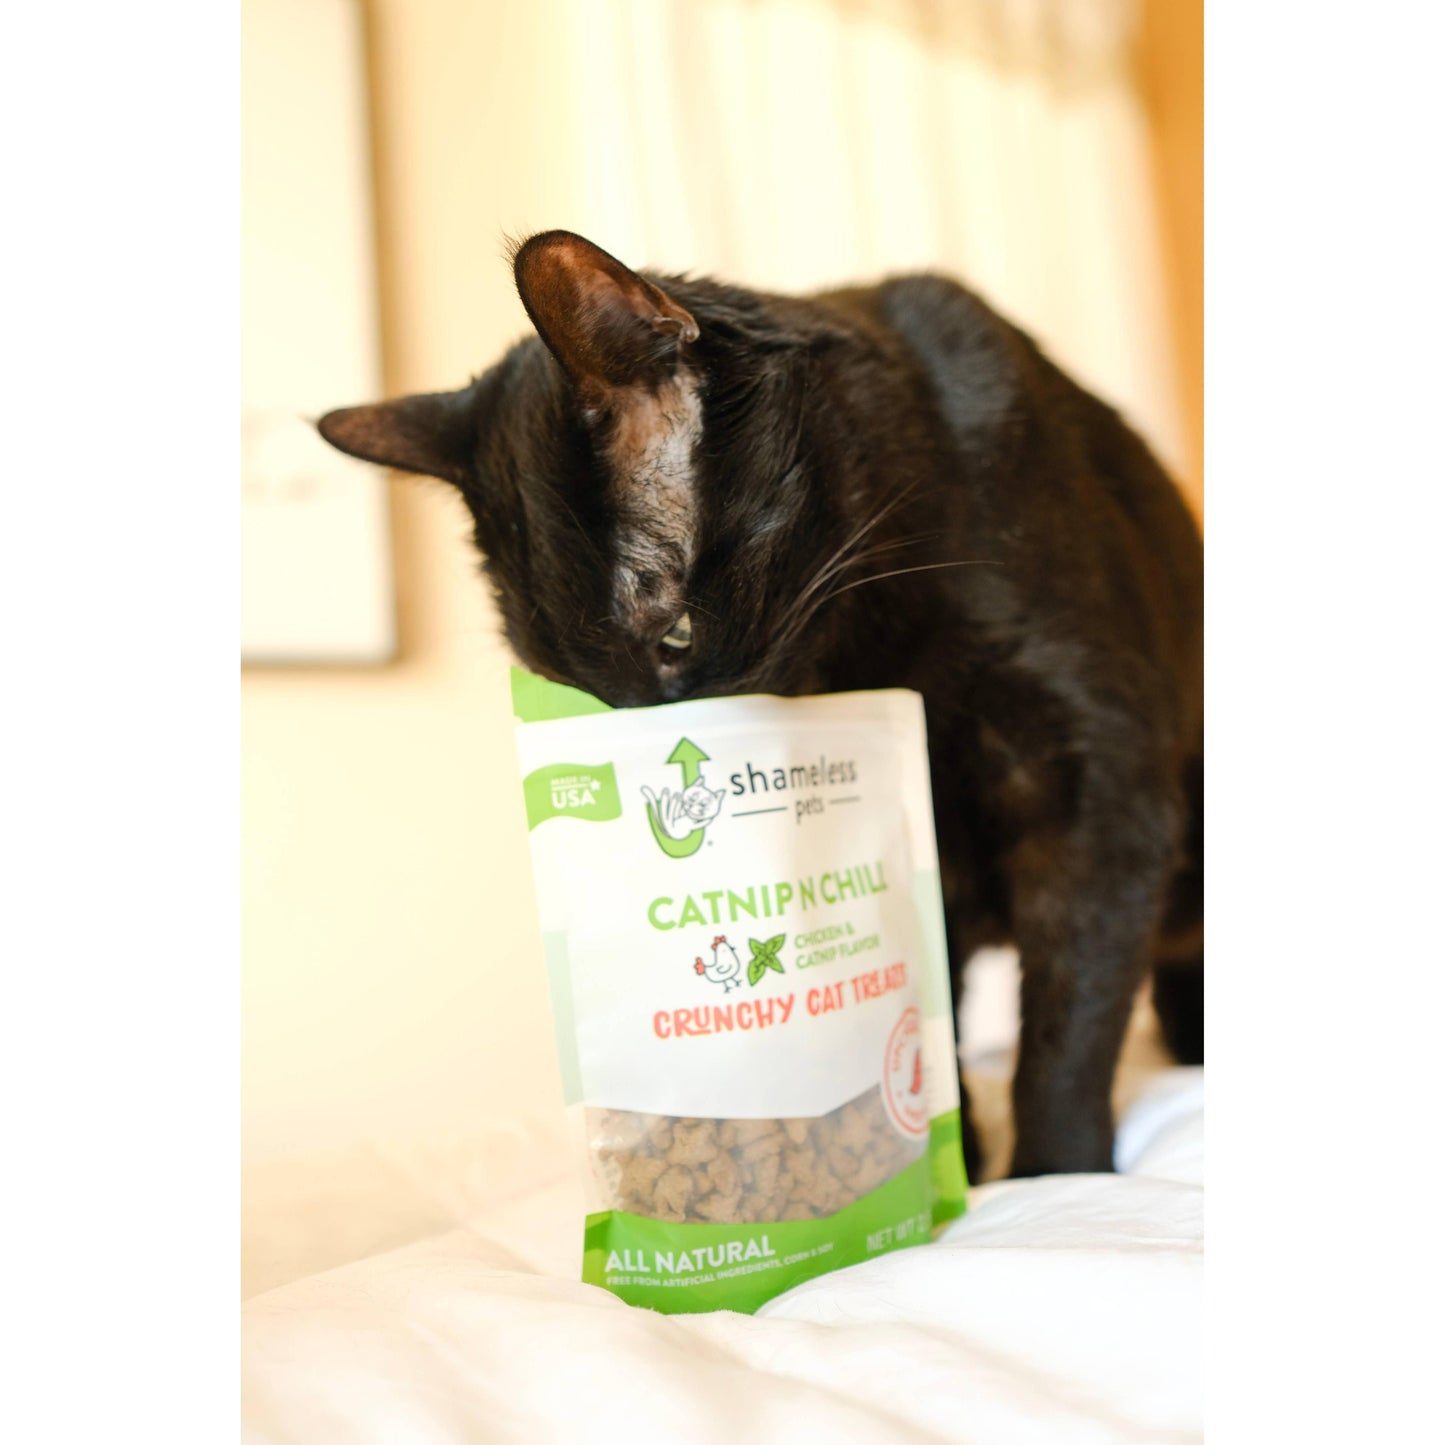 Shameless Pets Catnip N Chill Crunchy Cat Treats